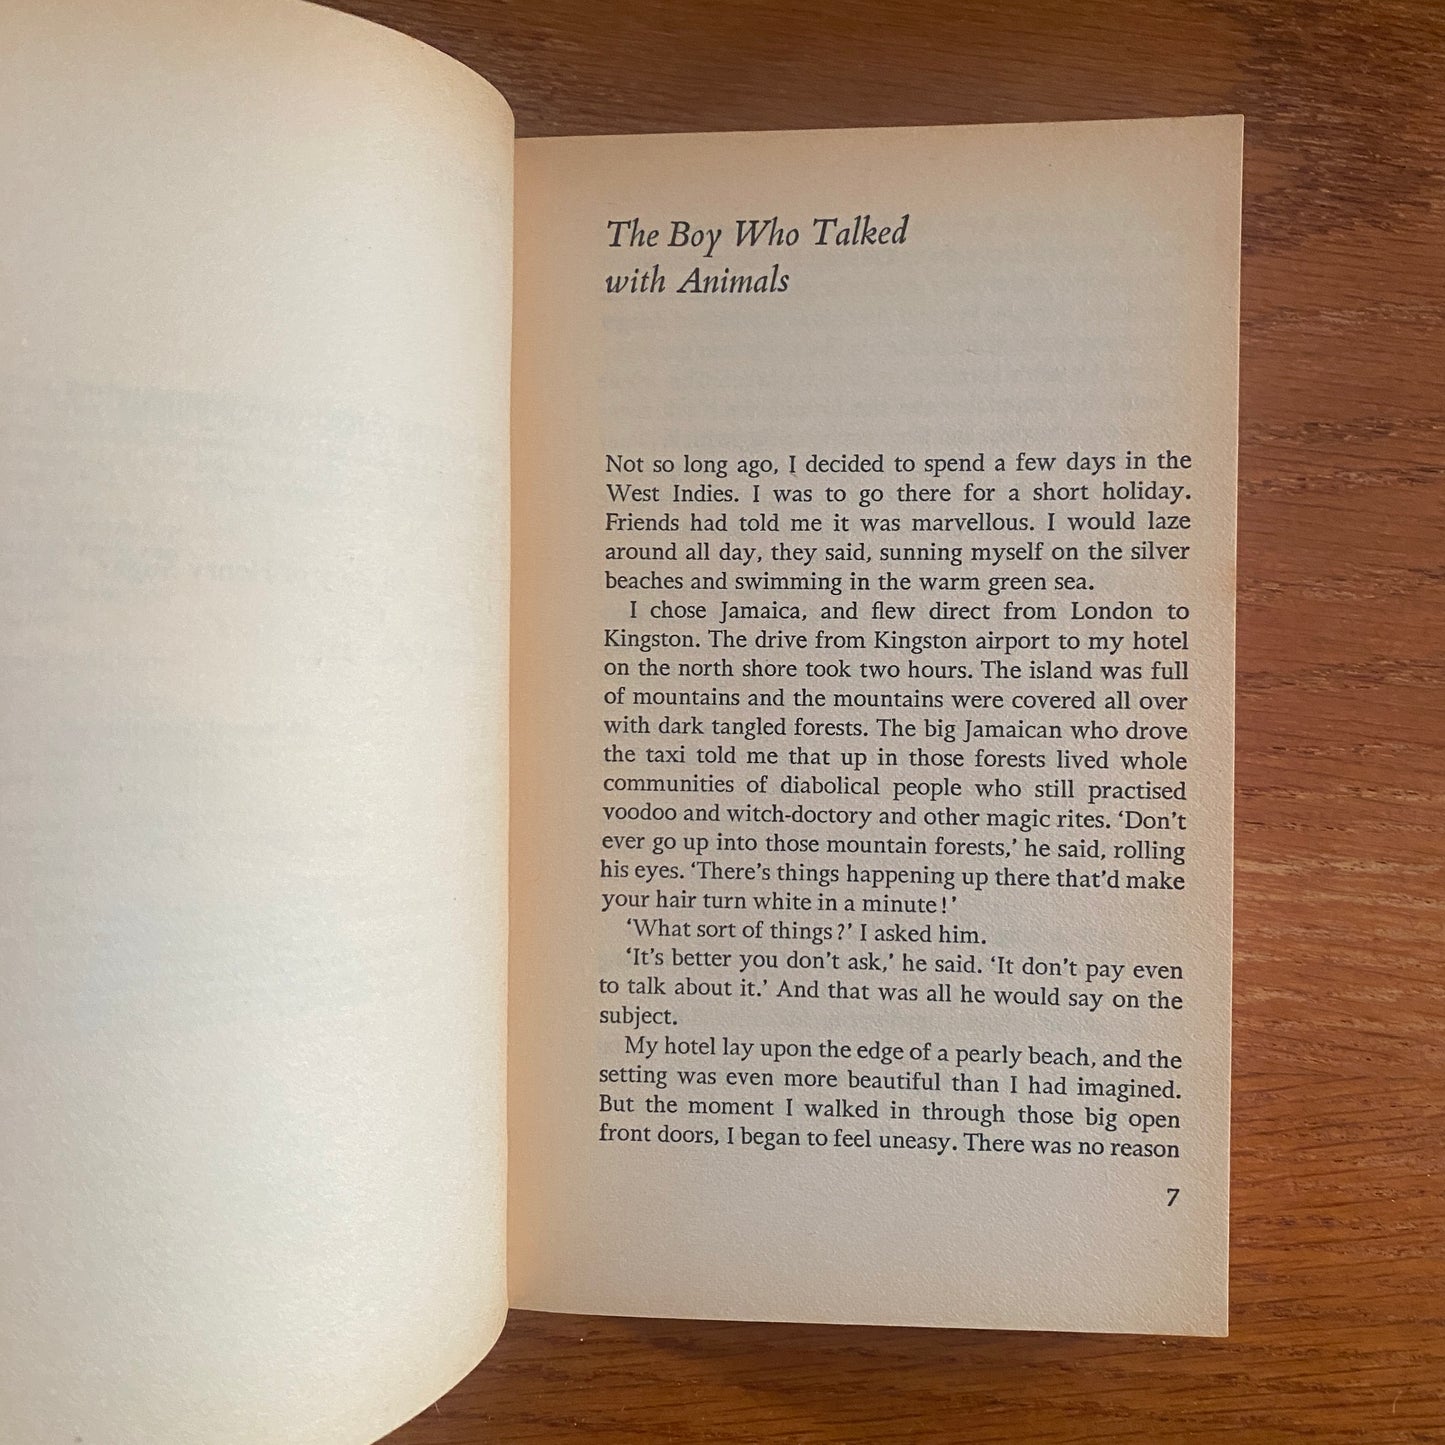 Roald Dahl - The Wonderful World Of Henry Sugar